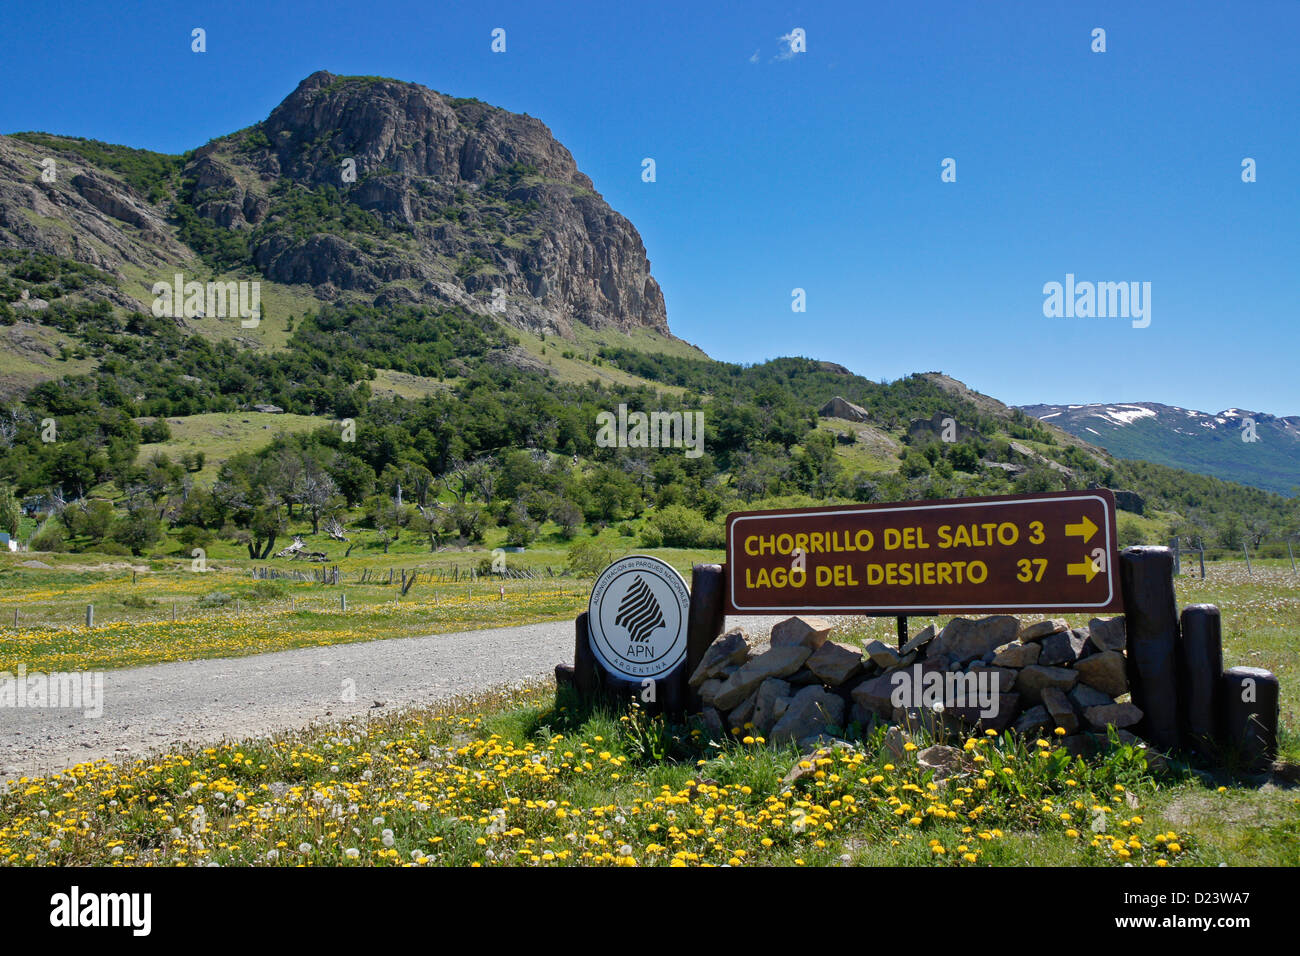 Road sign in Los Glaciares National Park, Patagonia, Argentina Stock Photo